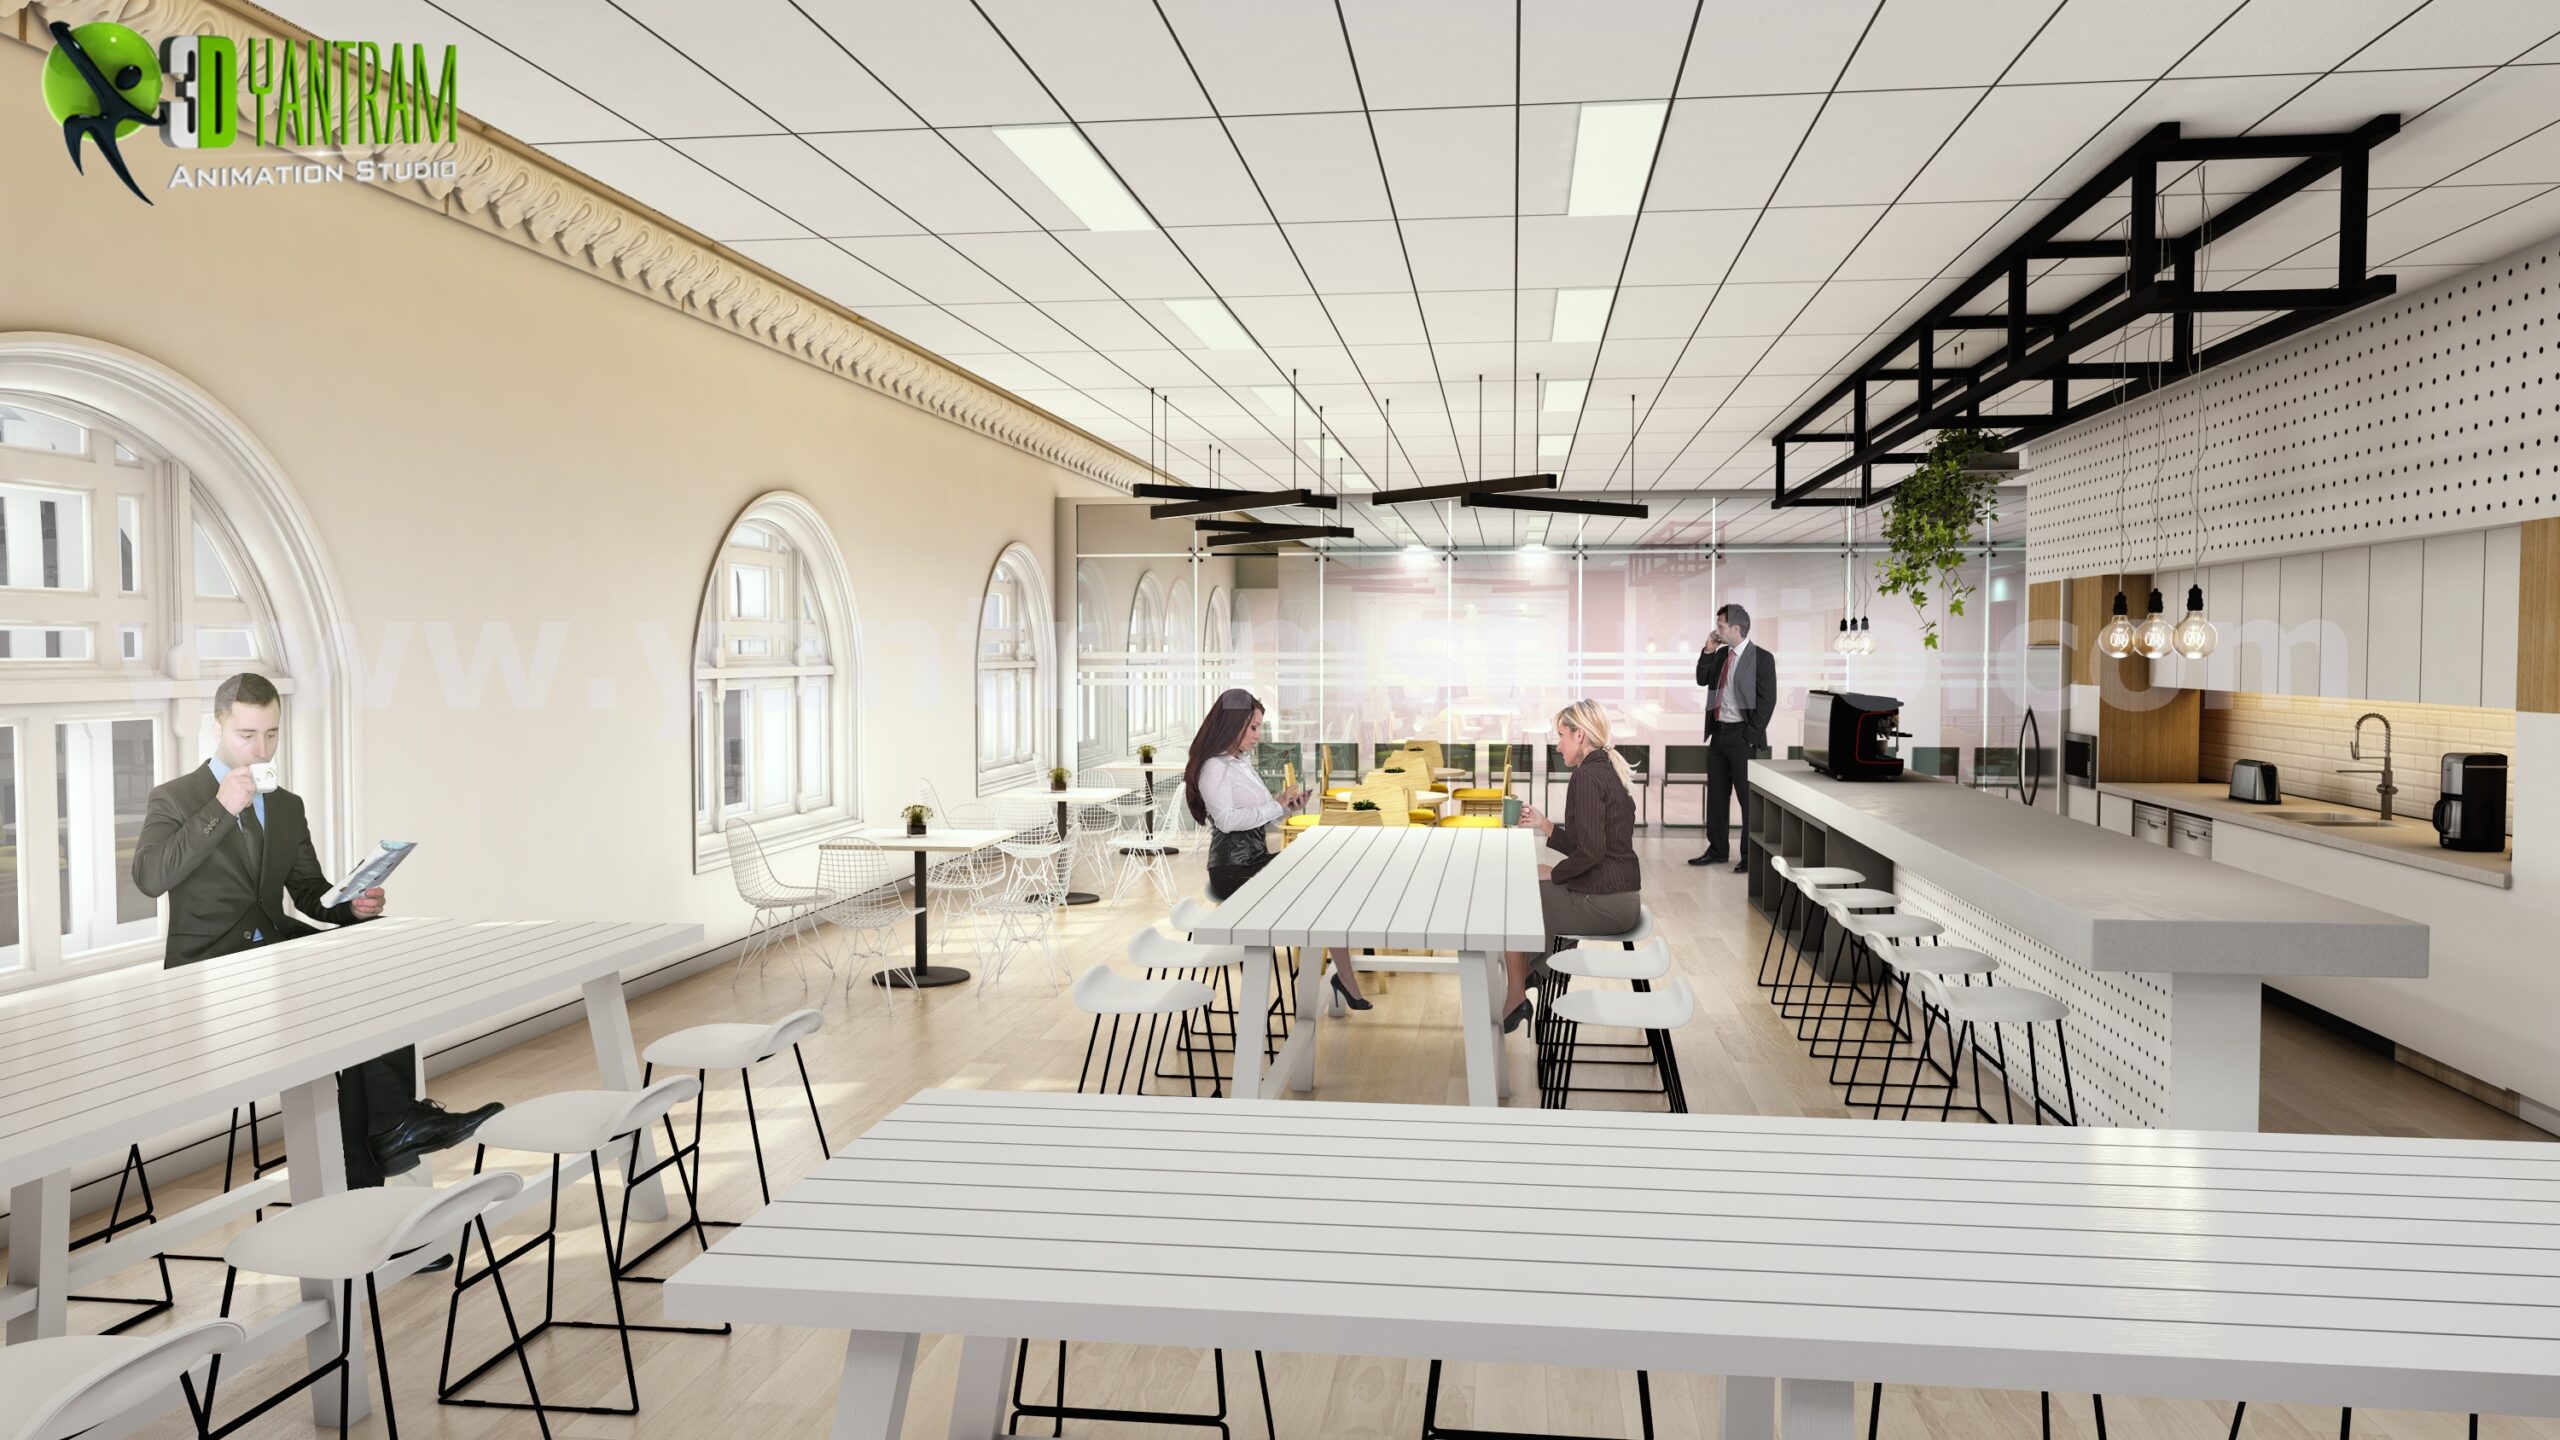 3D Walkthrough Visualization of Interior Office Space of 3d architectural animation studio, Sydney – Australia